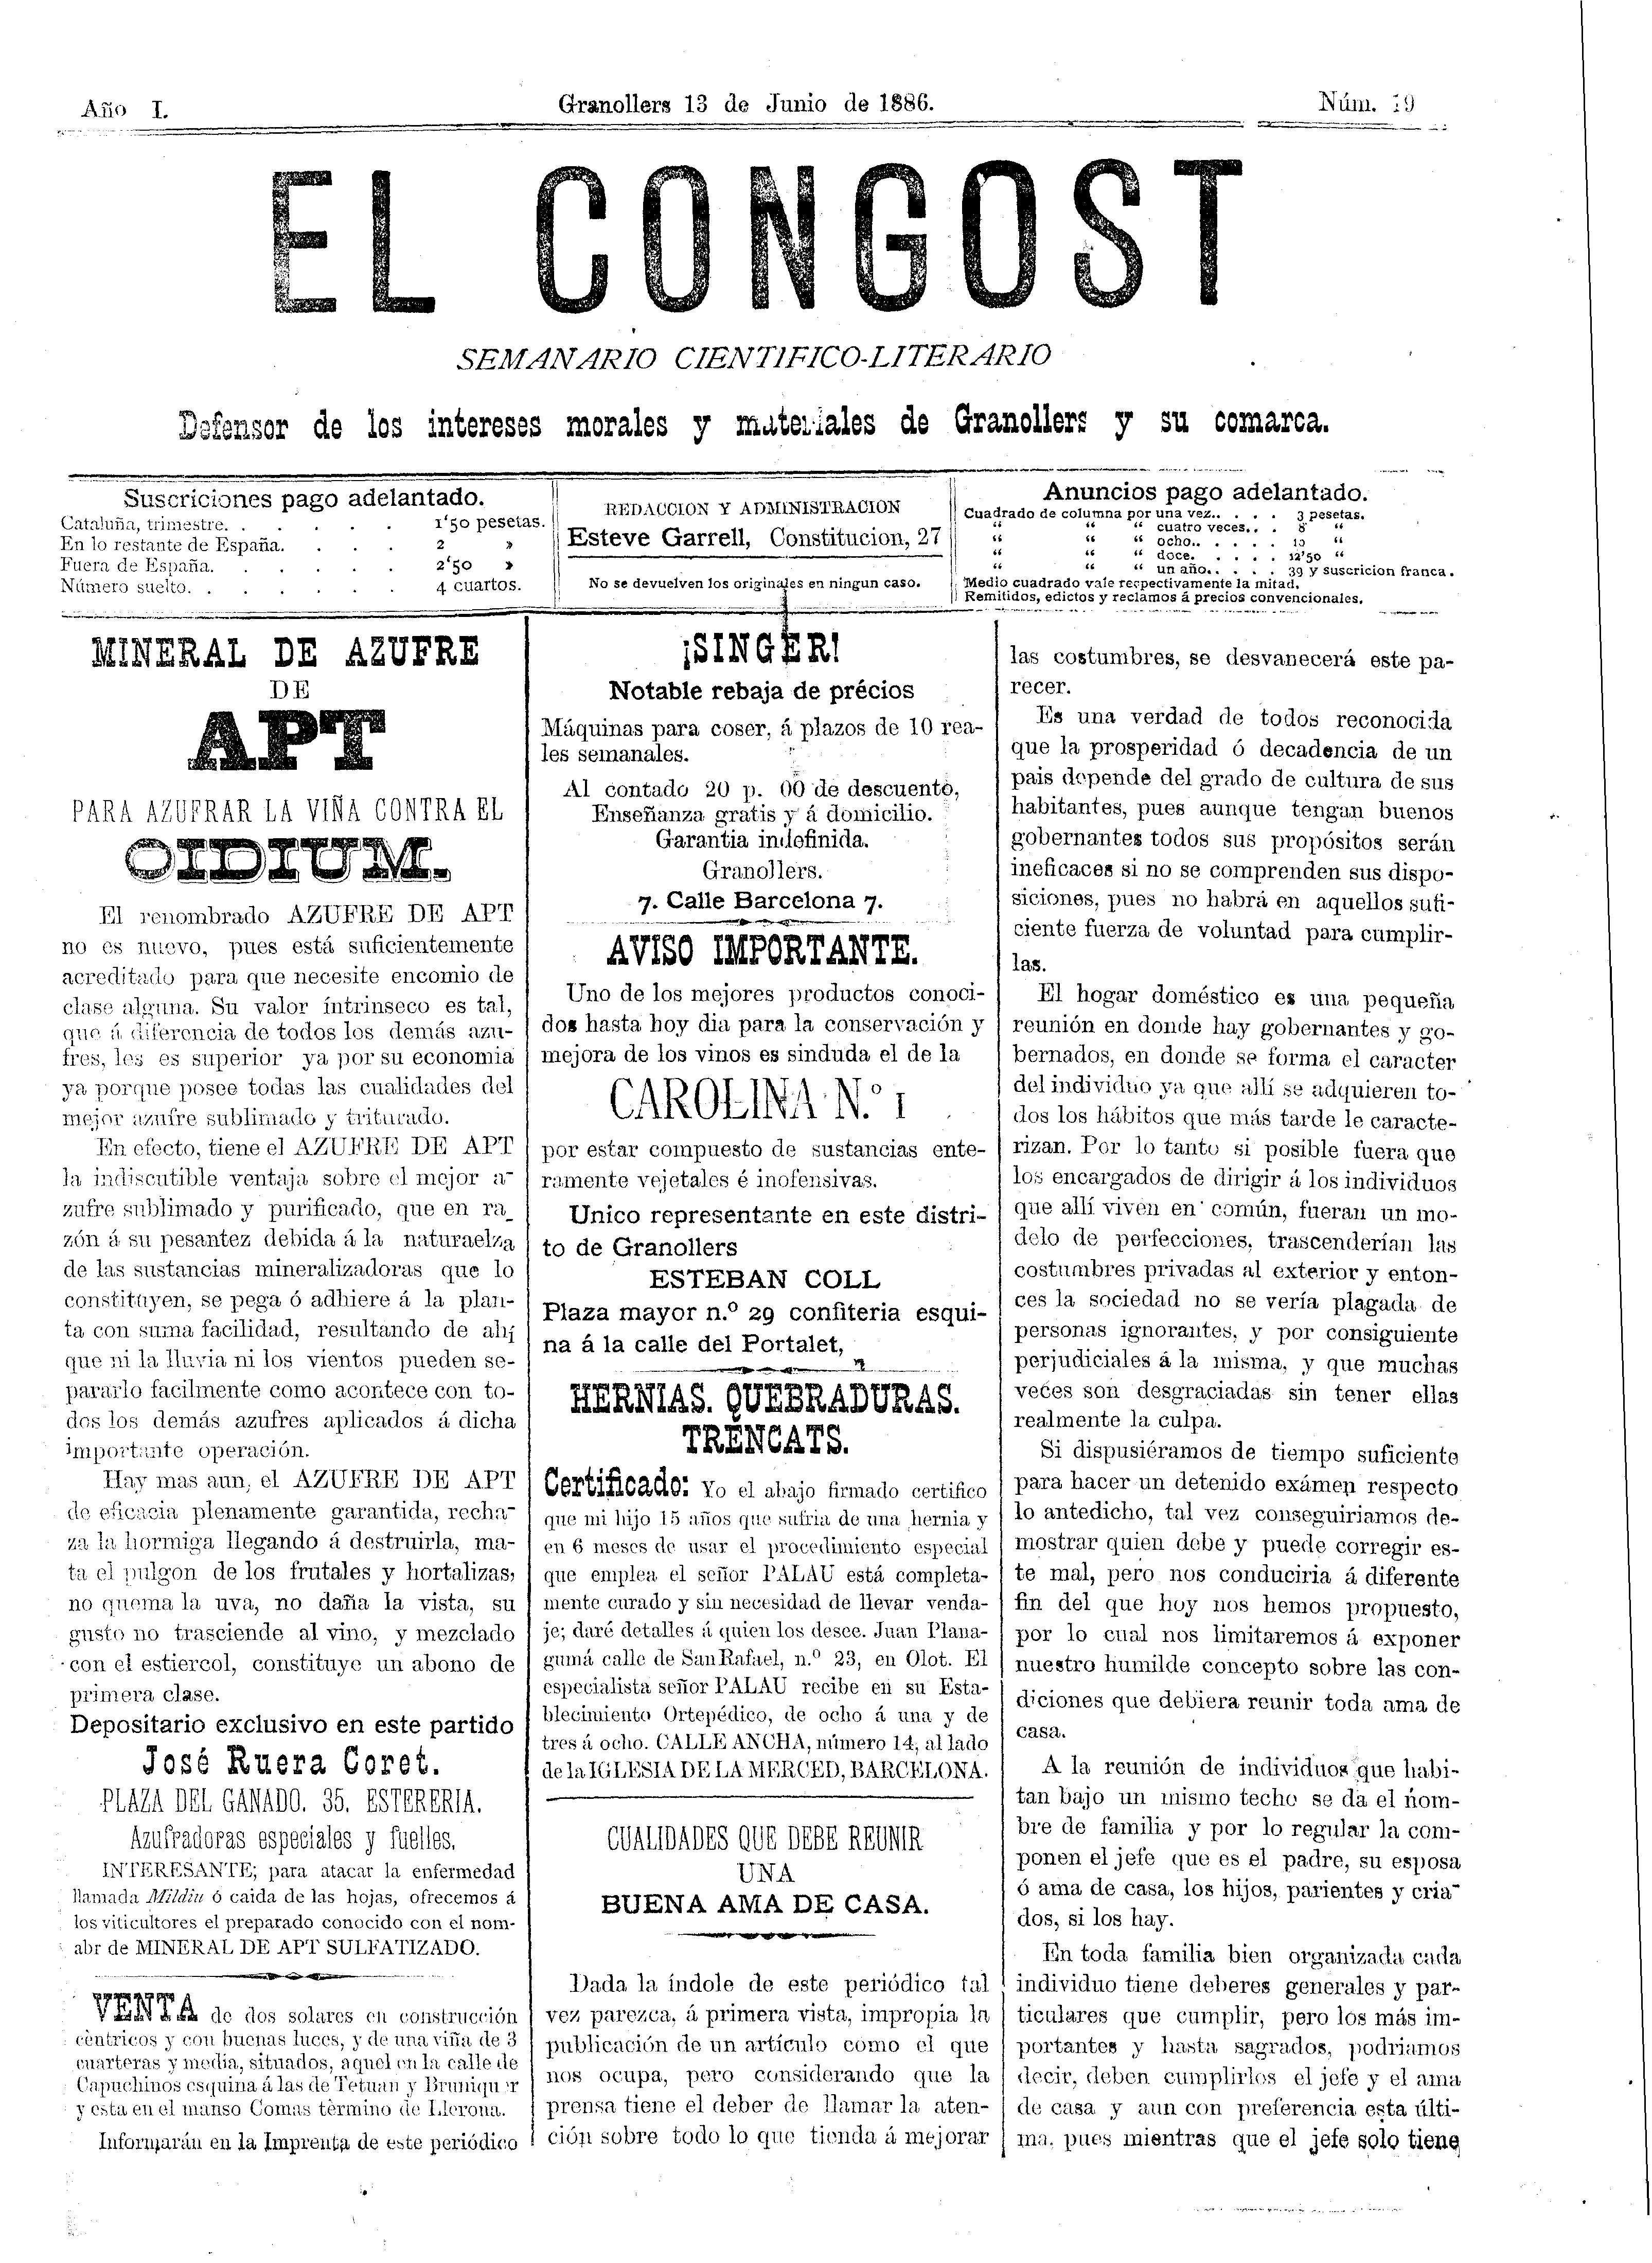 El Congost, 13/6/1886 [Exemplar]